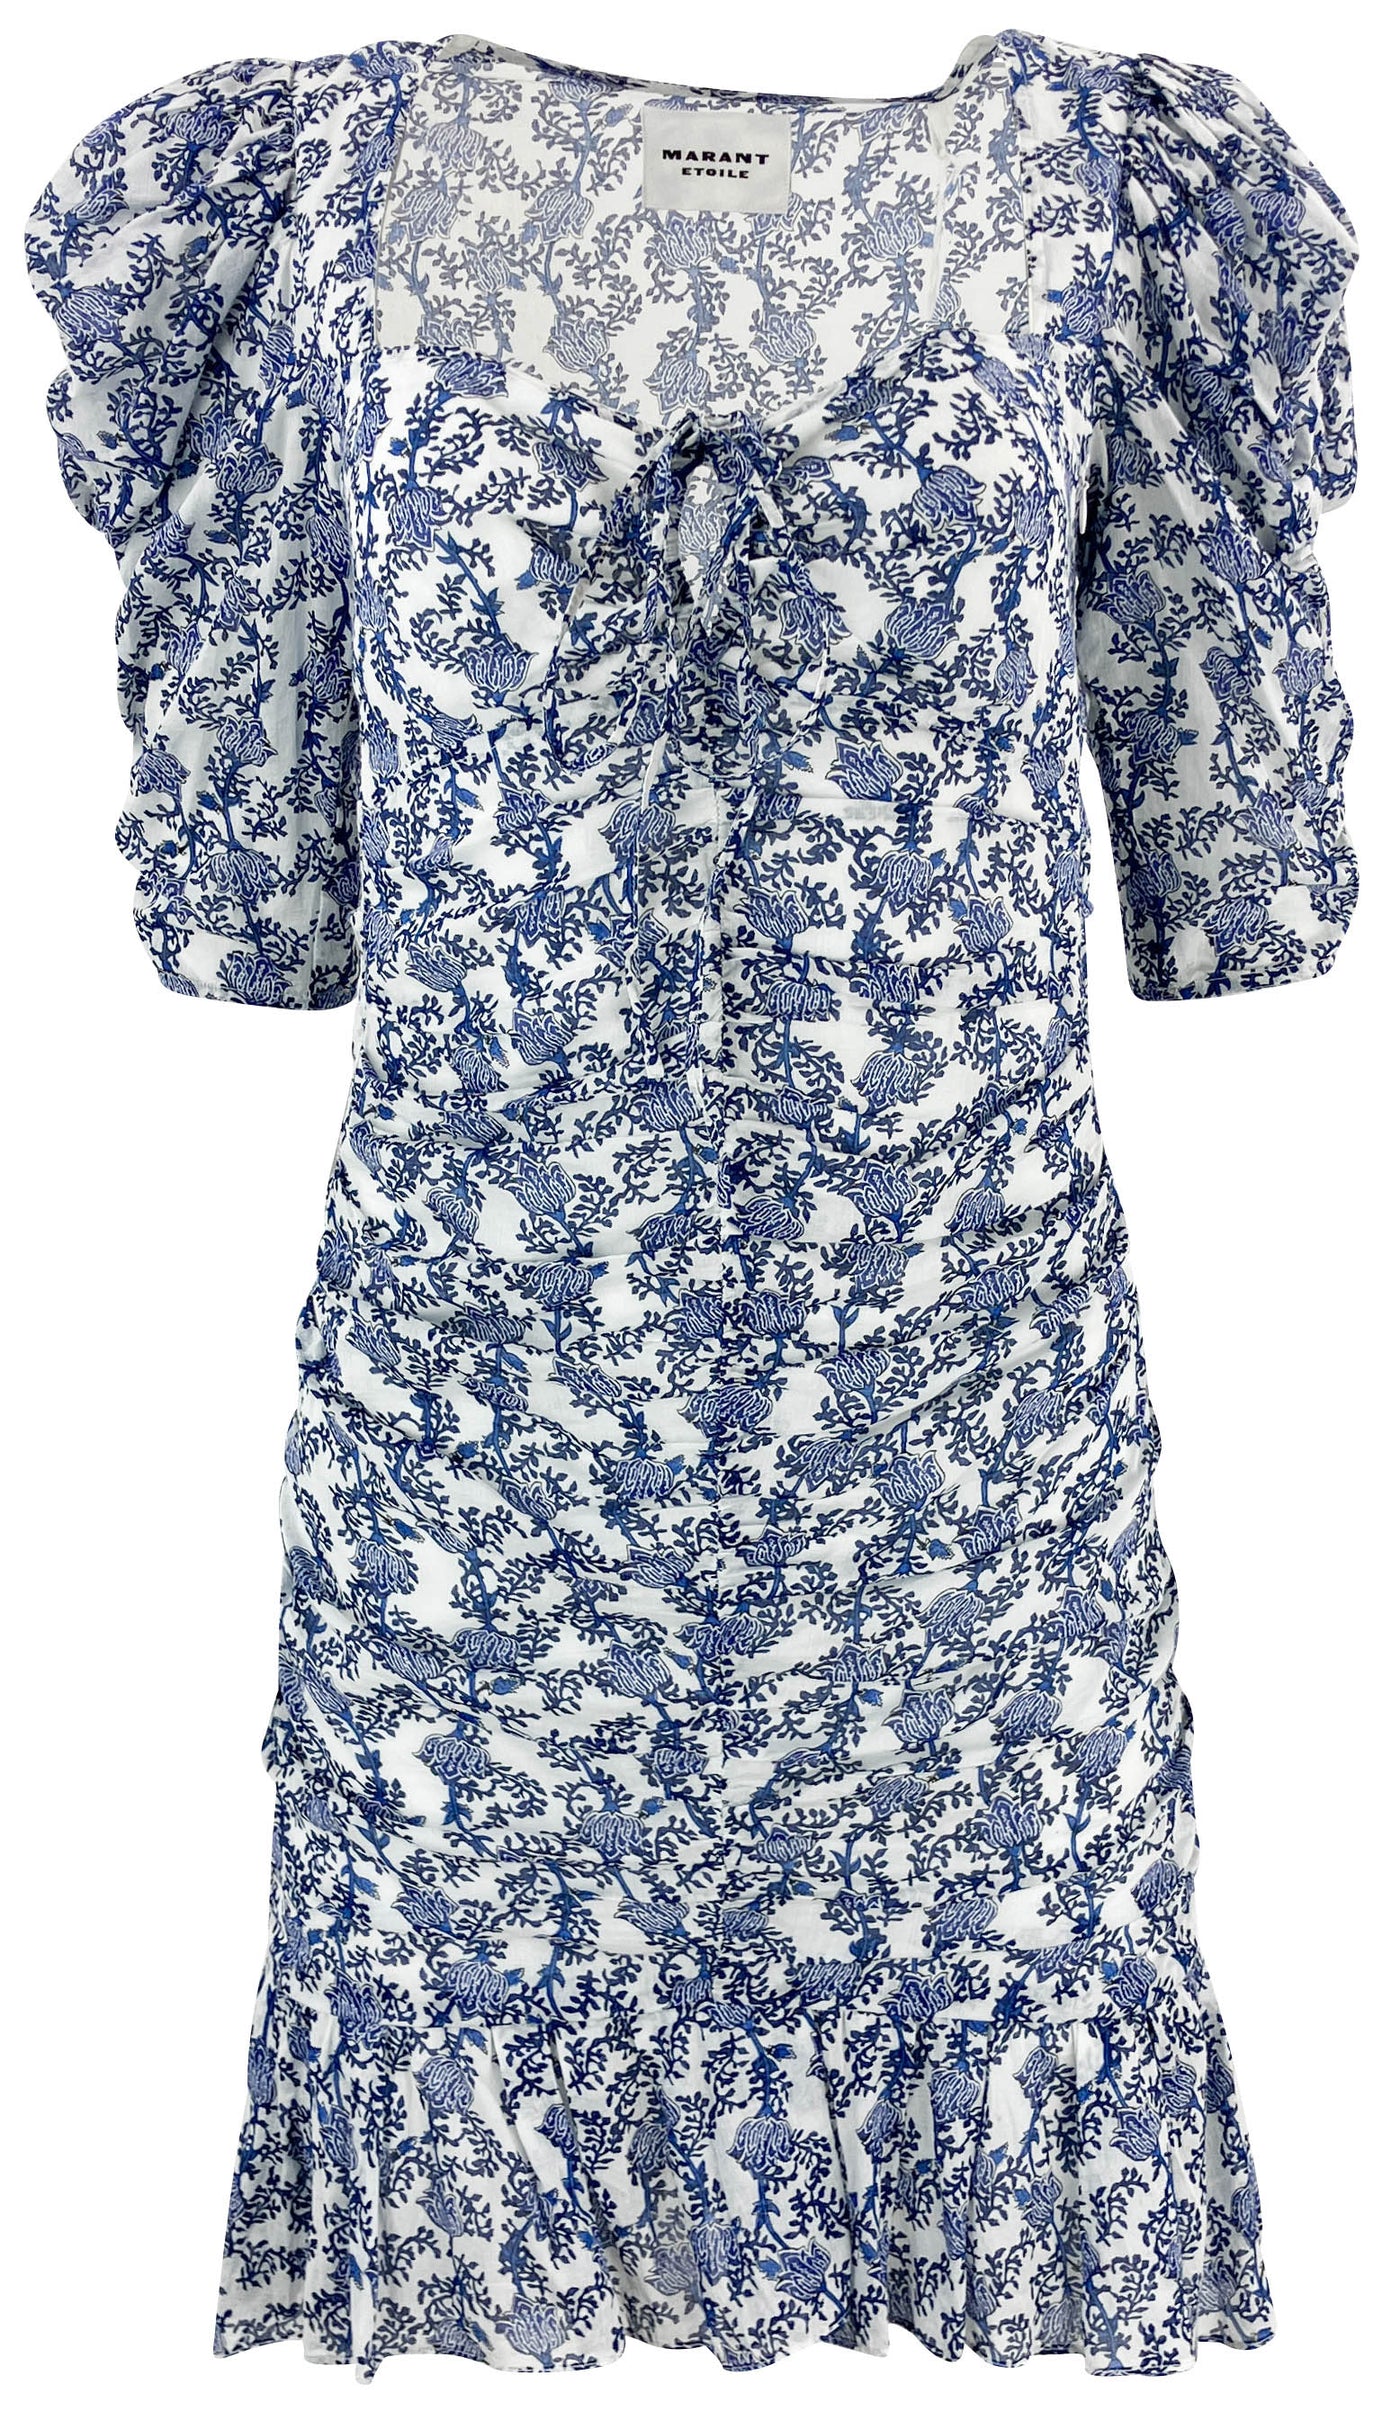 Isabel Marant Étoile Galdino Printed Cotton Dress in Royal Blue - Discounts on Isabel Marant at UAL